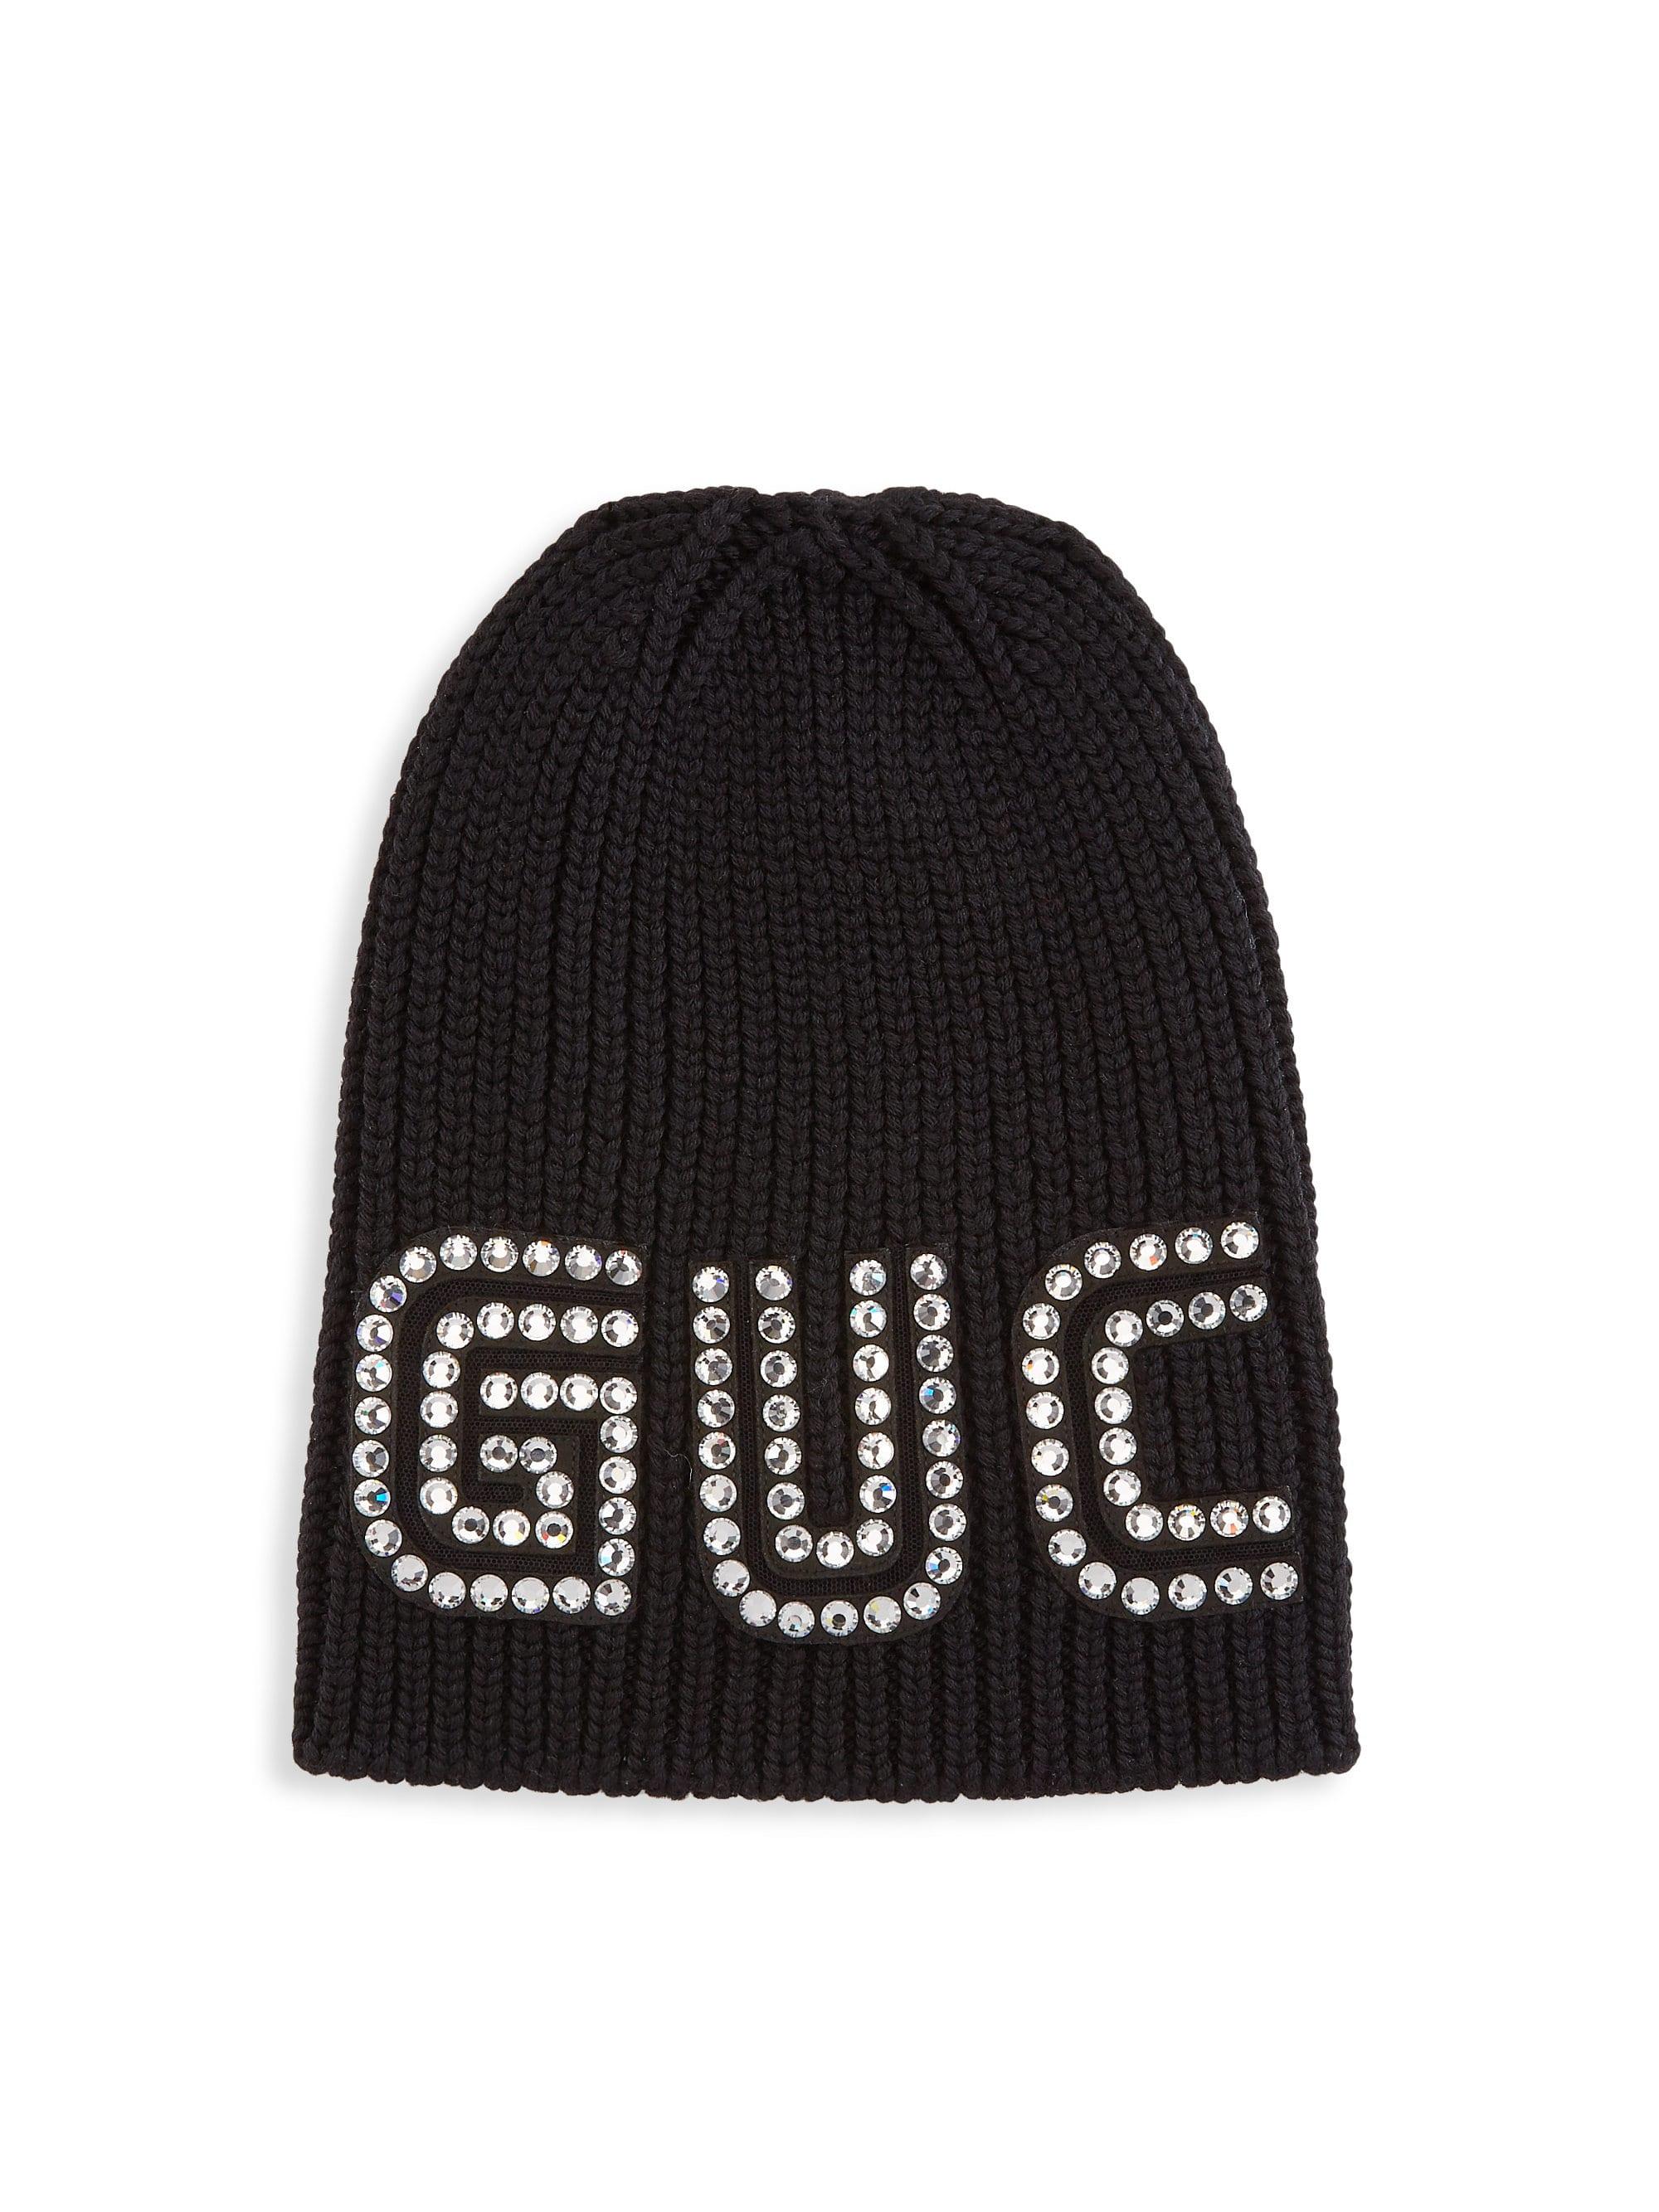 Gucci Game Guccy Rib-knit Wool Beanie Hat in Black | Lyst